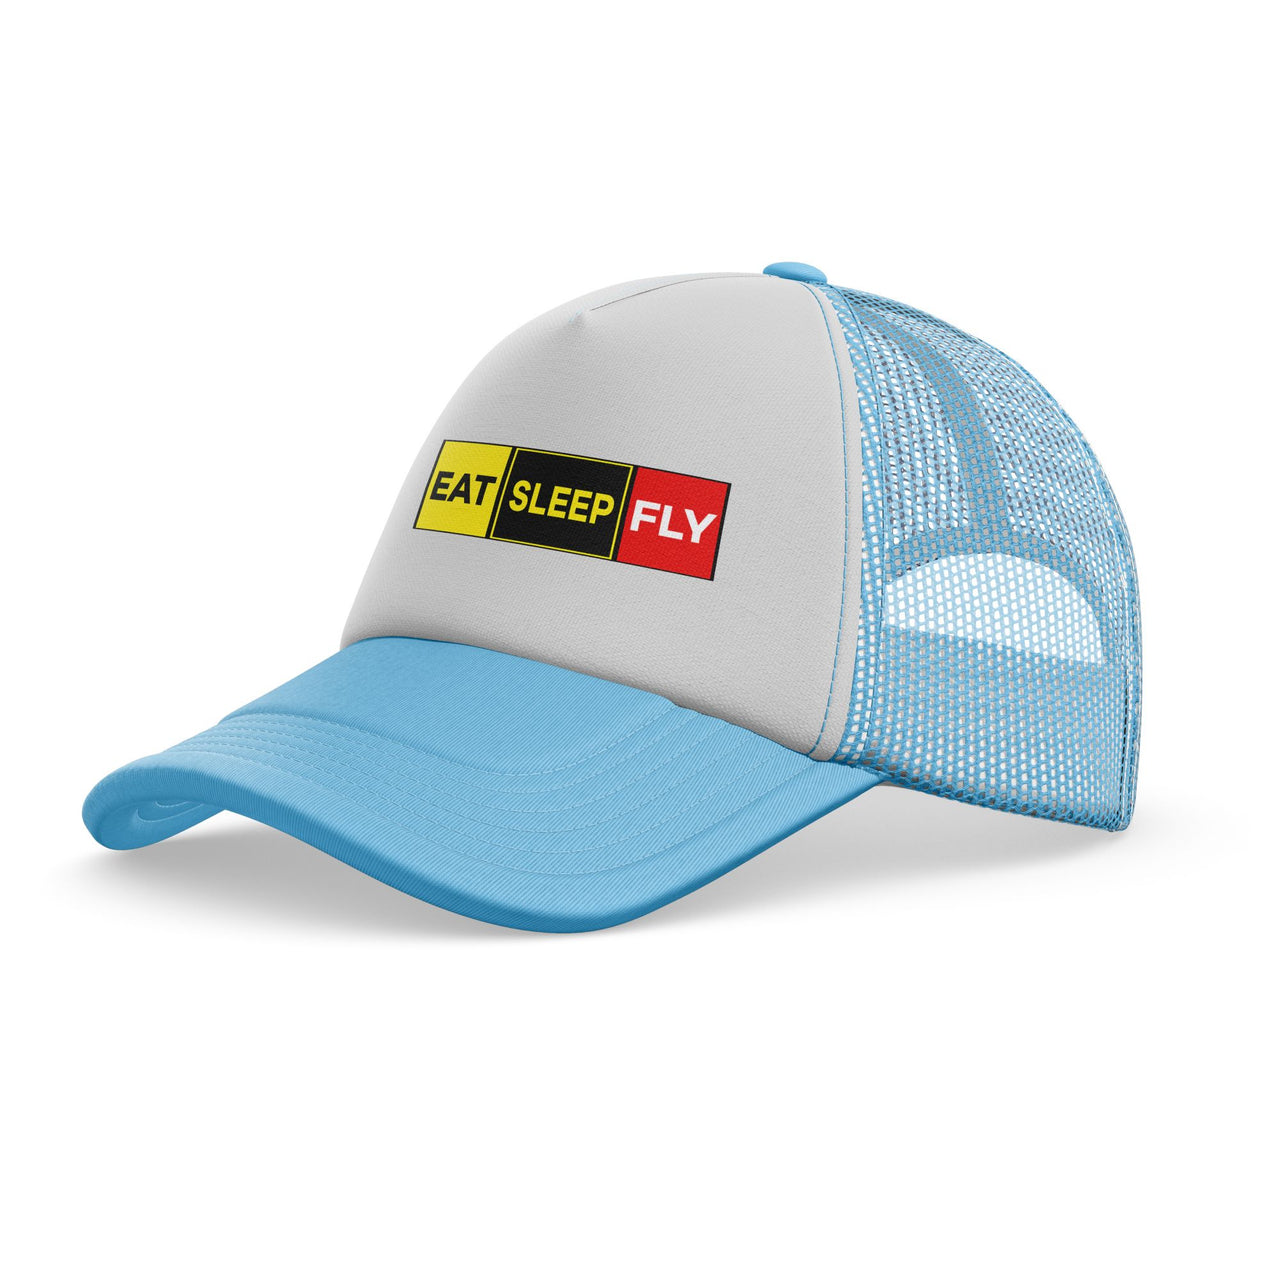 Eat Sleep Fly (Colourful) Designed Trucker Caps & Hats